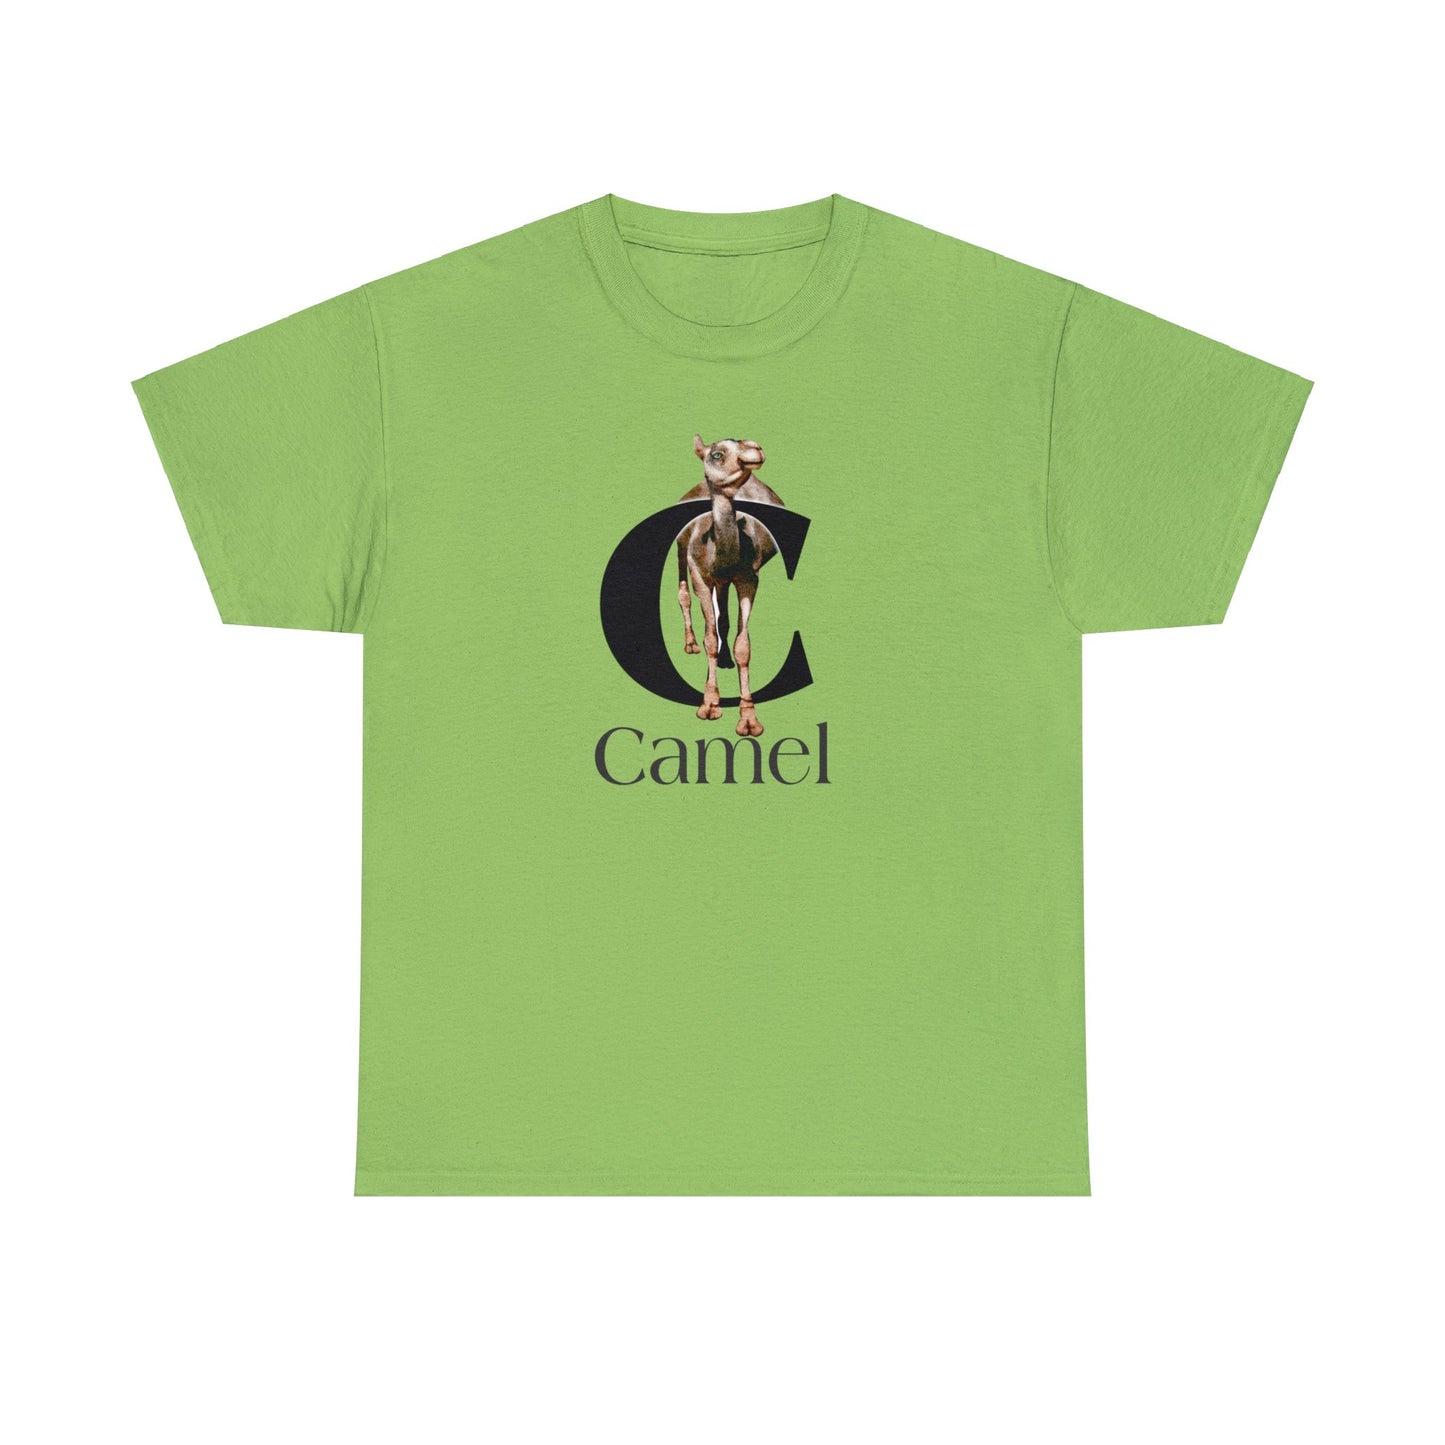 C is for Camel t-shirt, Camel Drawing T-Shirt, Camel Illustration, Camel lover shirt, animal